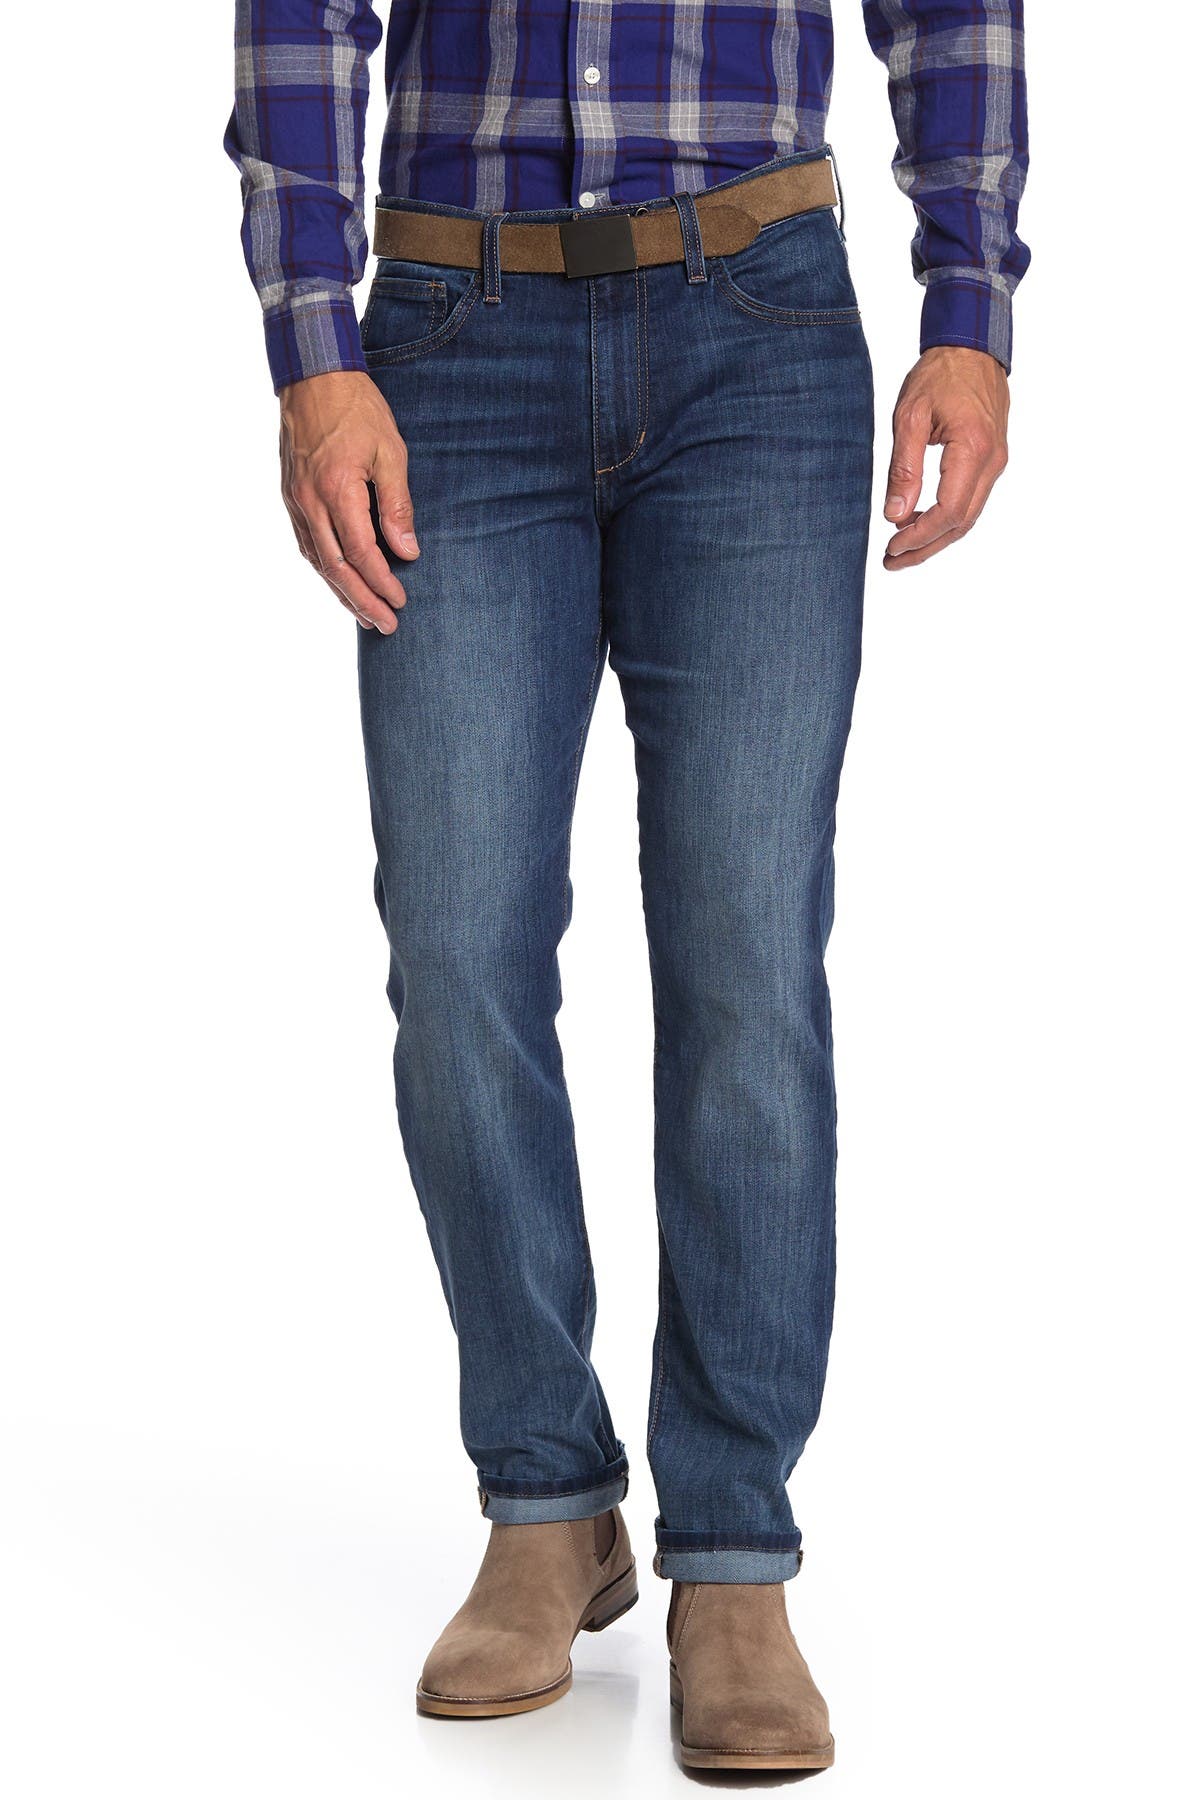 nordstrom rack joe's jeans